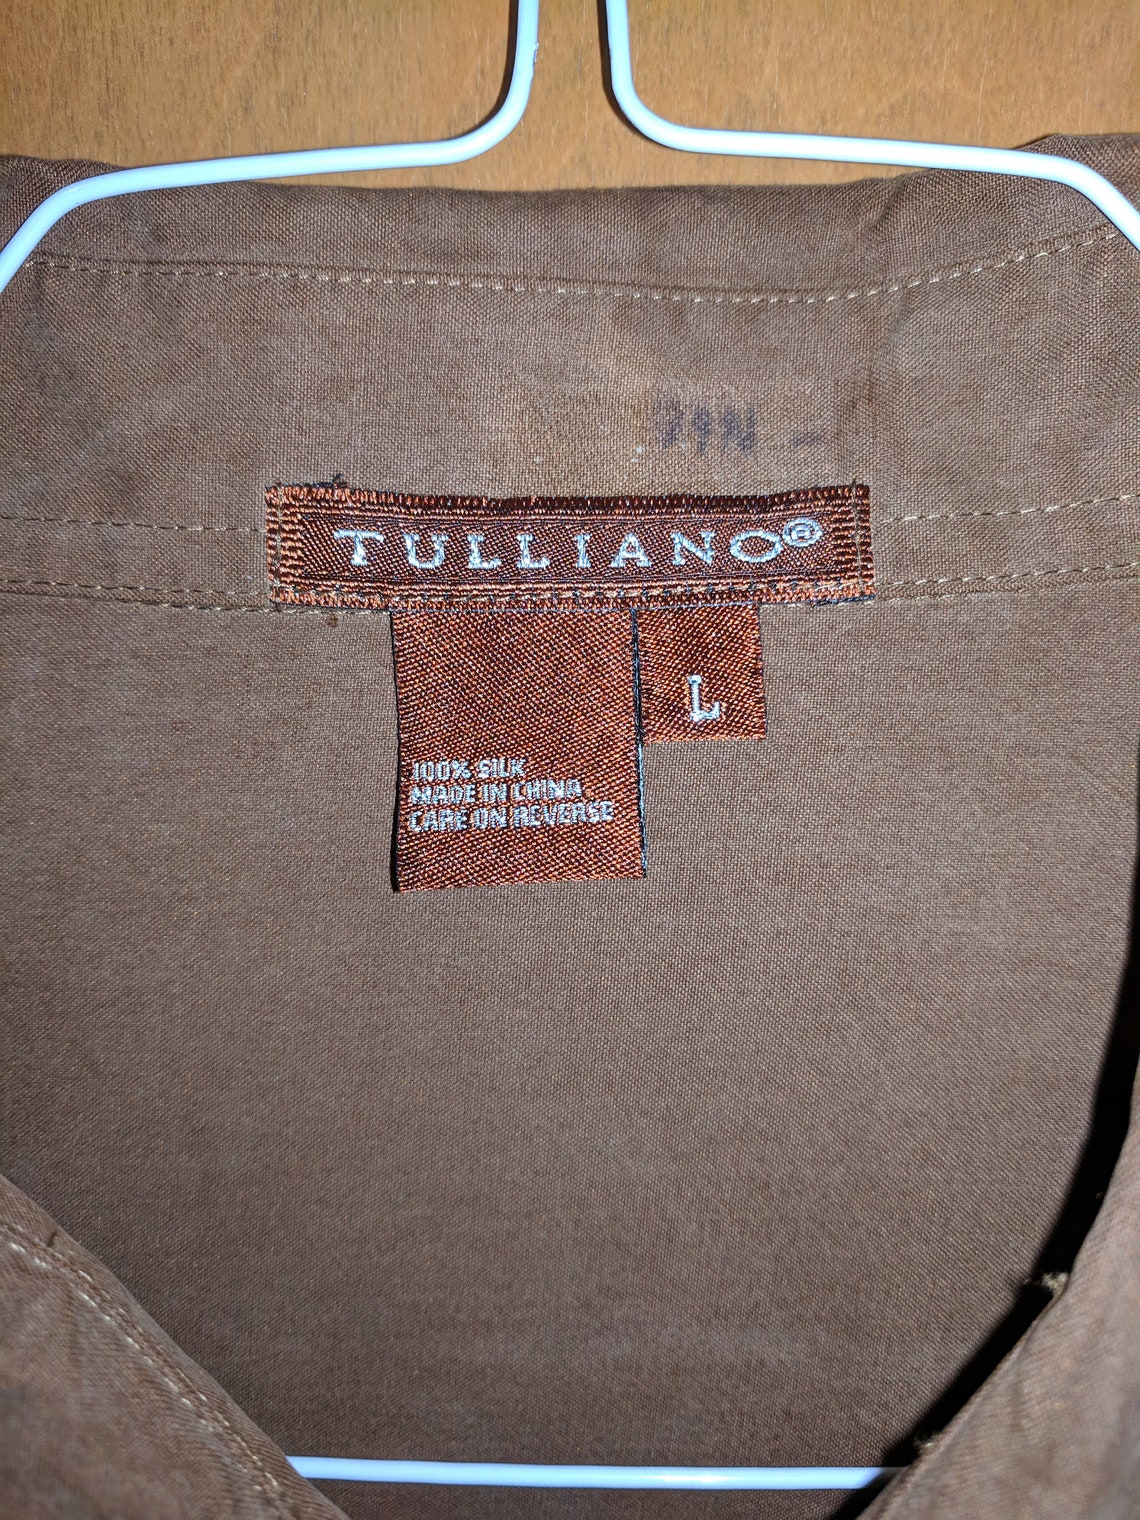 Tulliano Silk Shirt 100% Silk Brown Large - Etsy